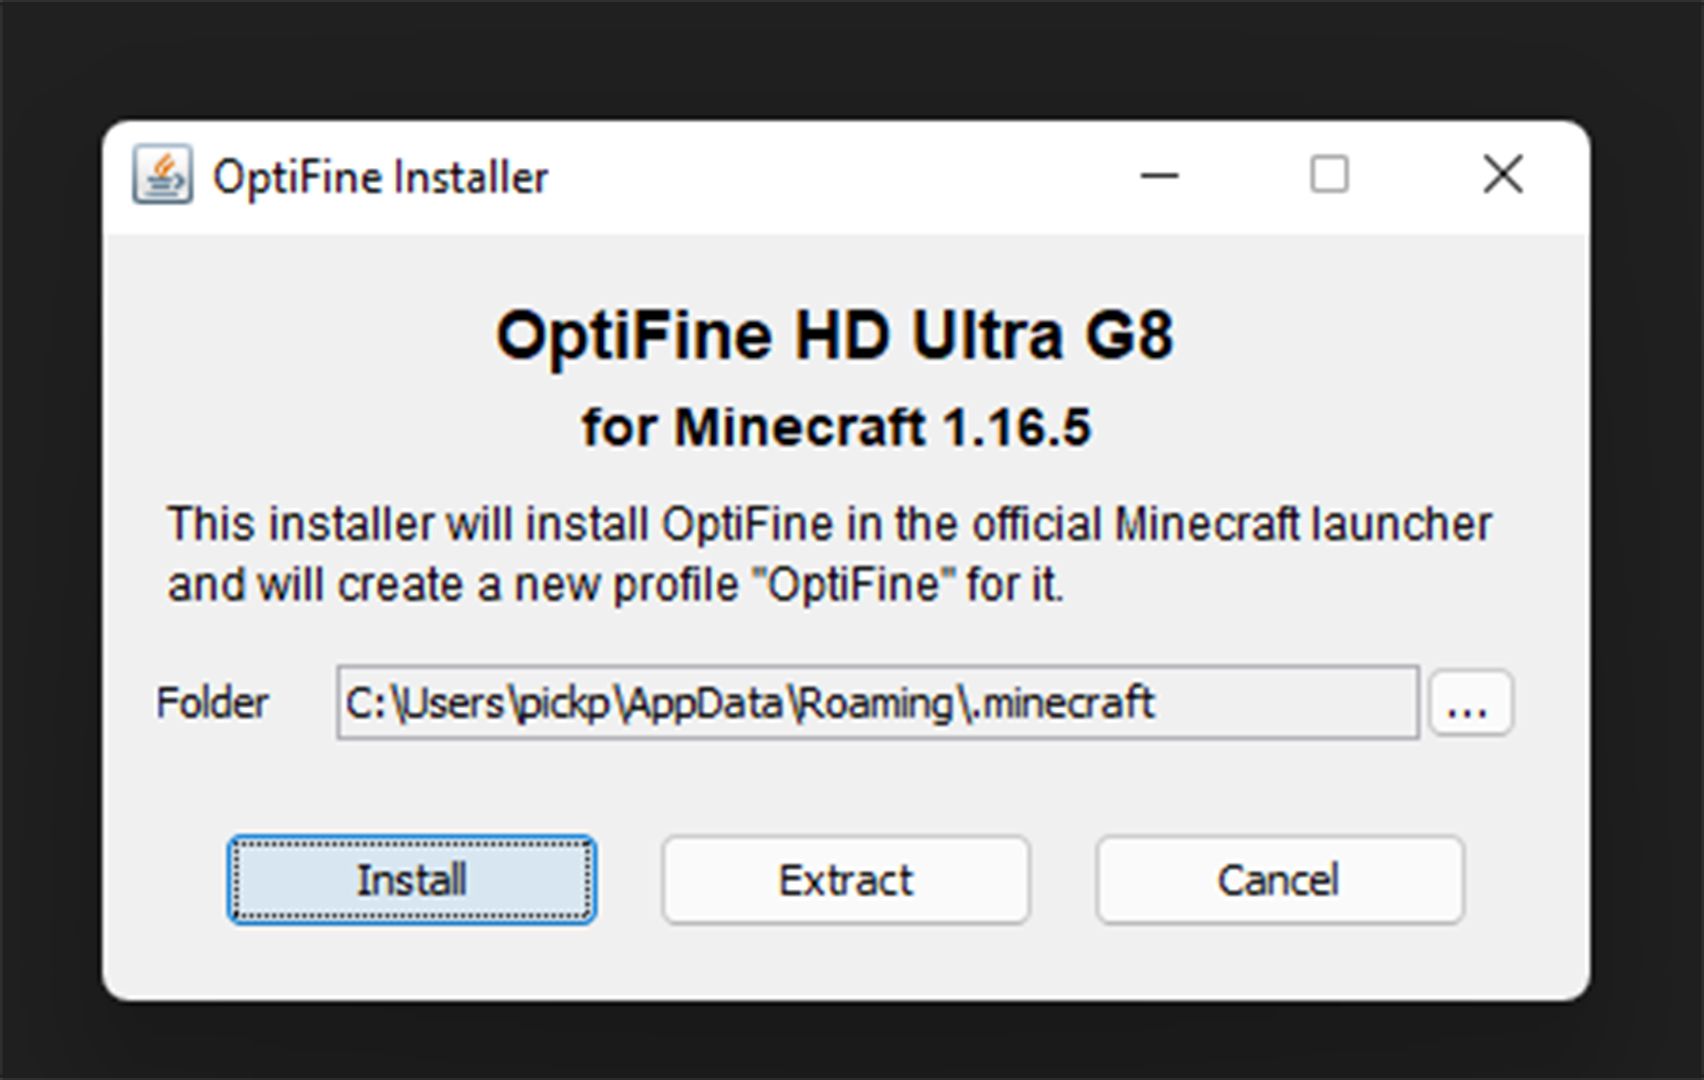 optifine installer screenshot - Come installare OptiFine per Minecraft